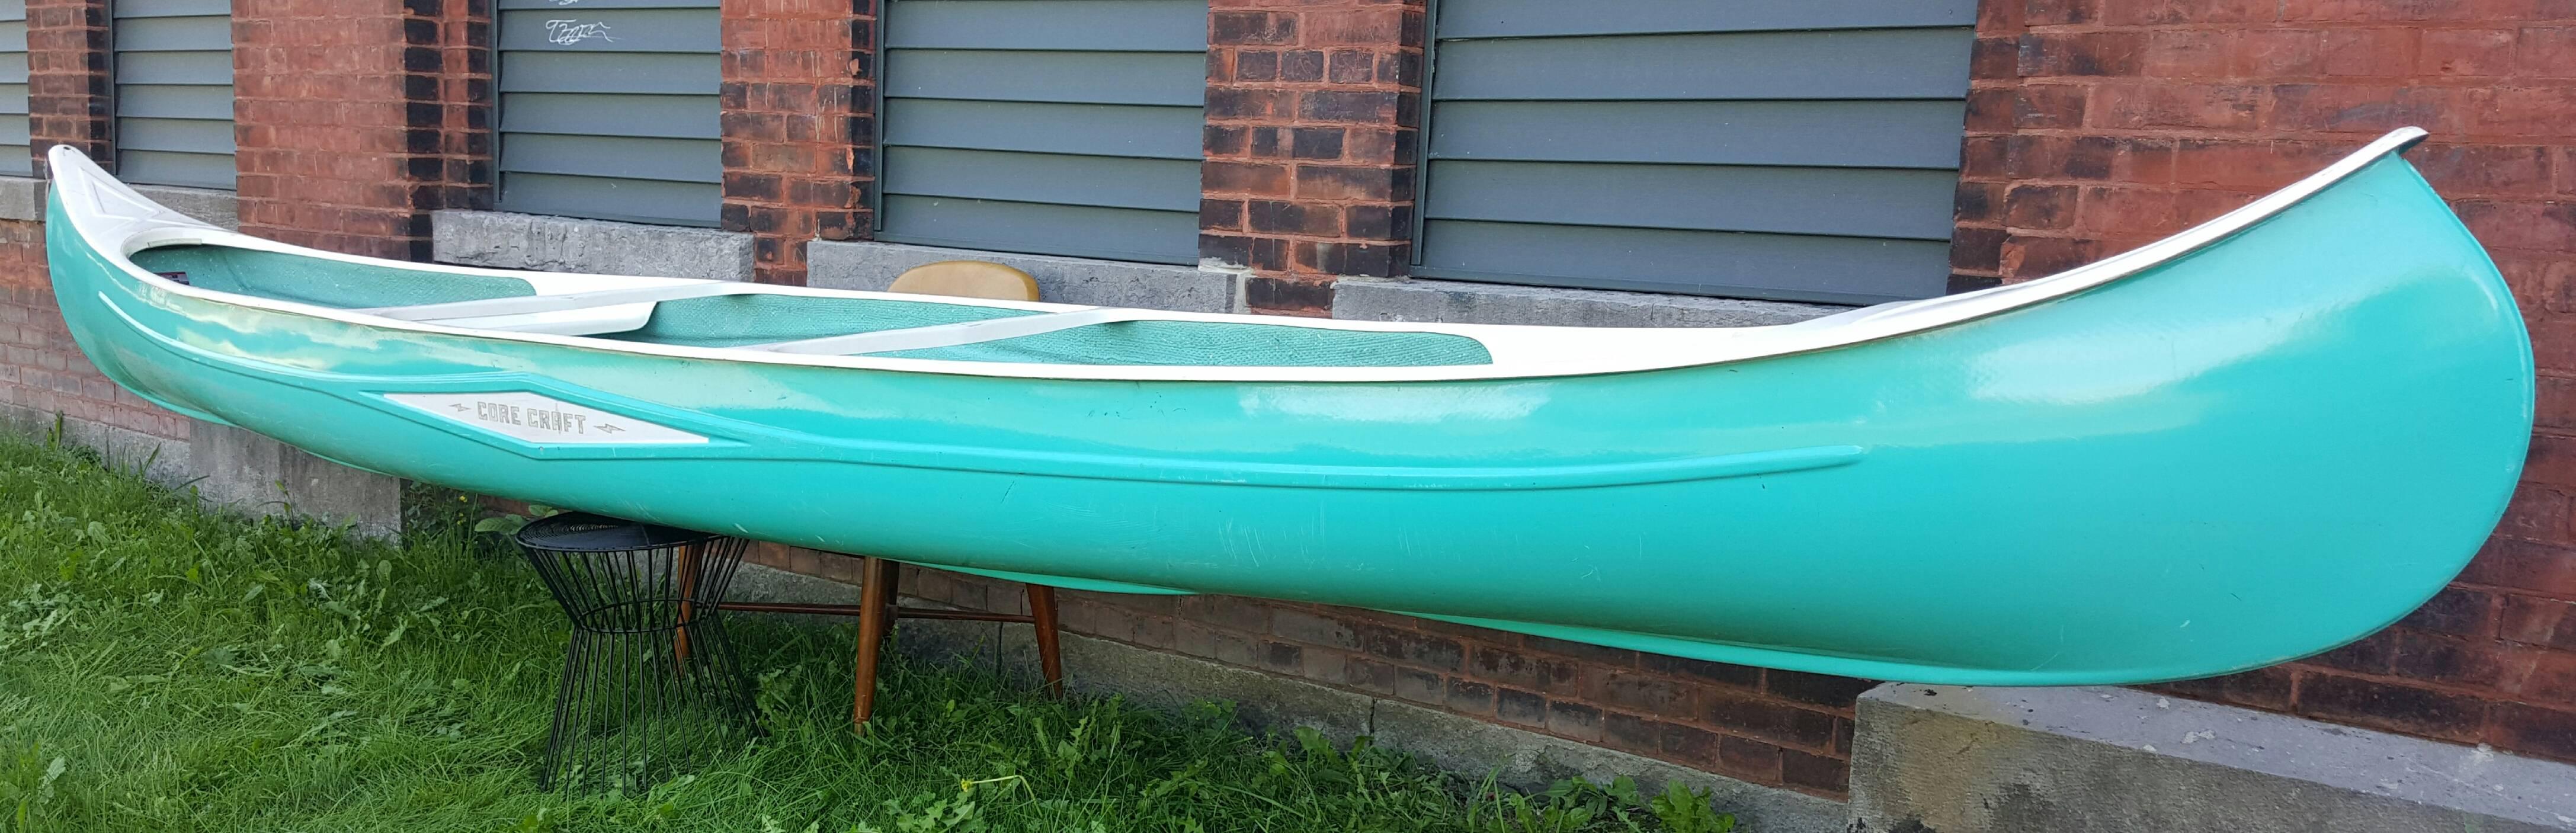 Mid-20th Century Mid-Century Modern 'Core Craft' Turquoise Fiberglass Canoe